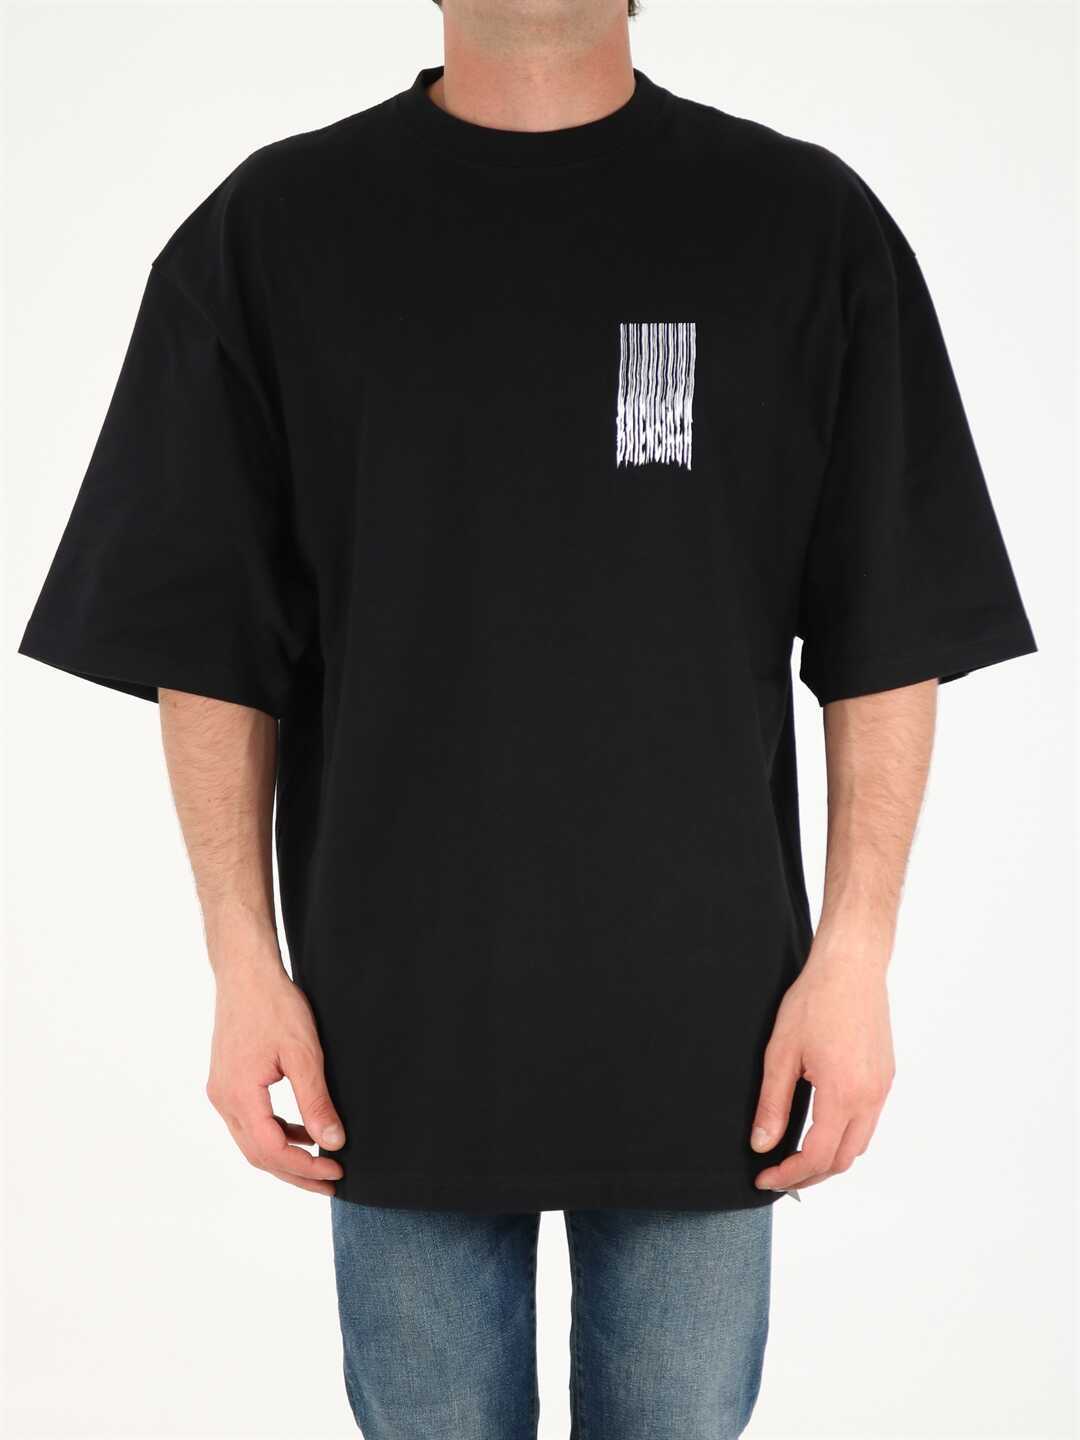 Balenciaga Oversized Barcode T-Shirt 661715 TKVE5 Black